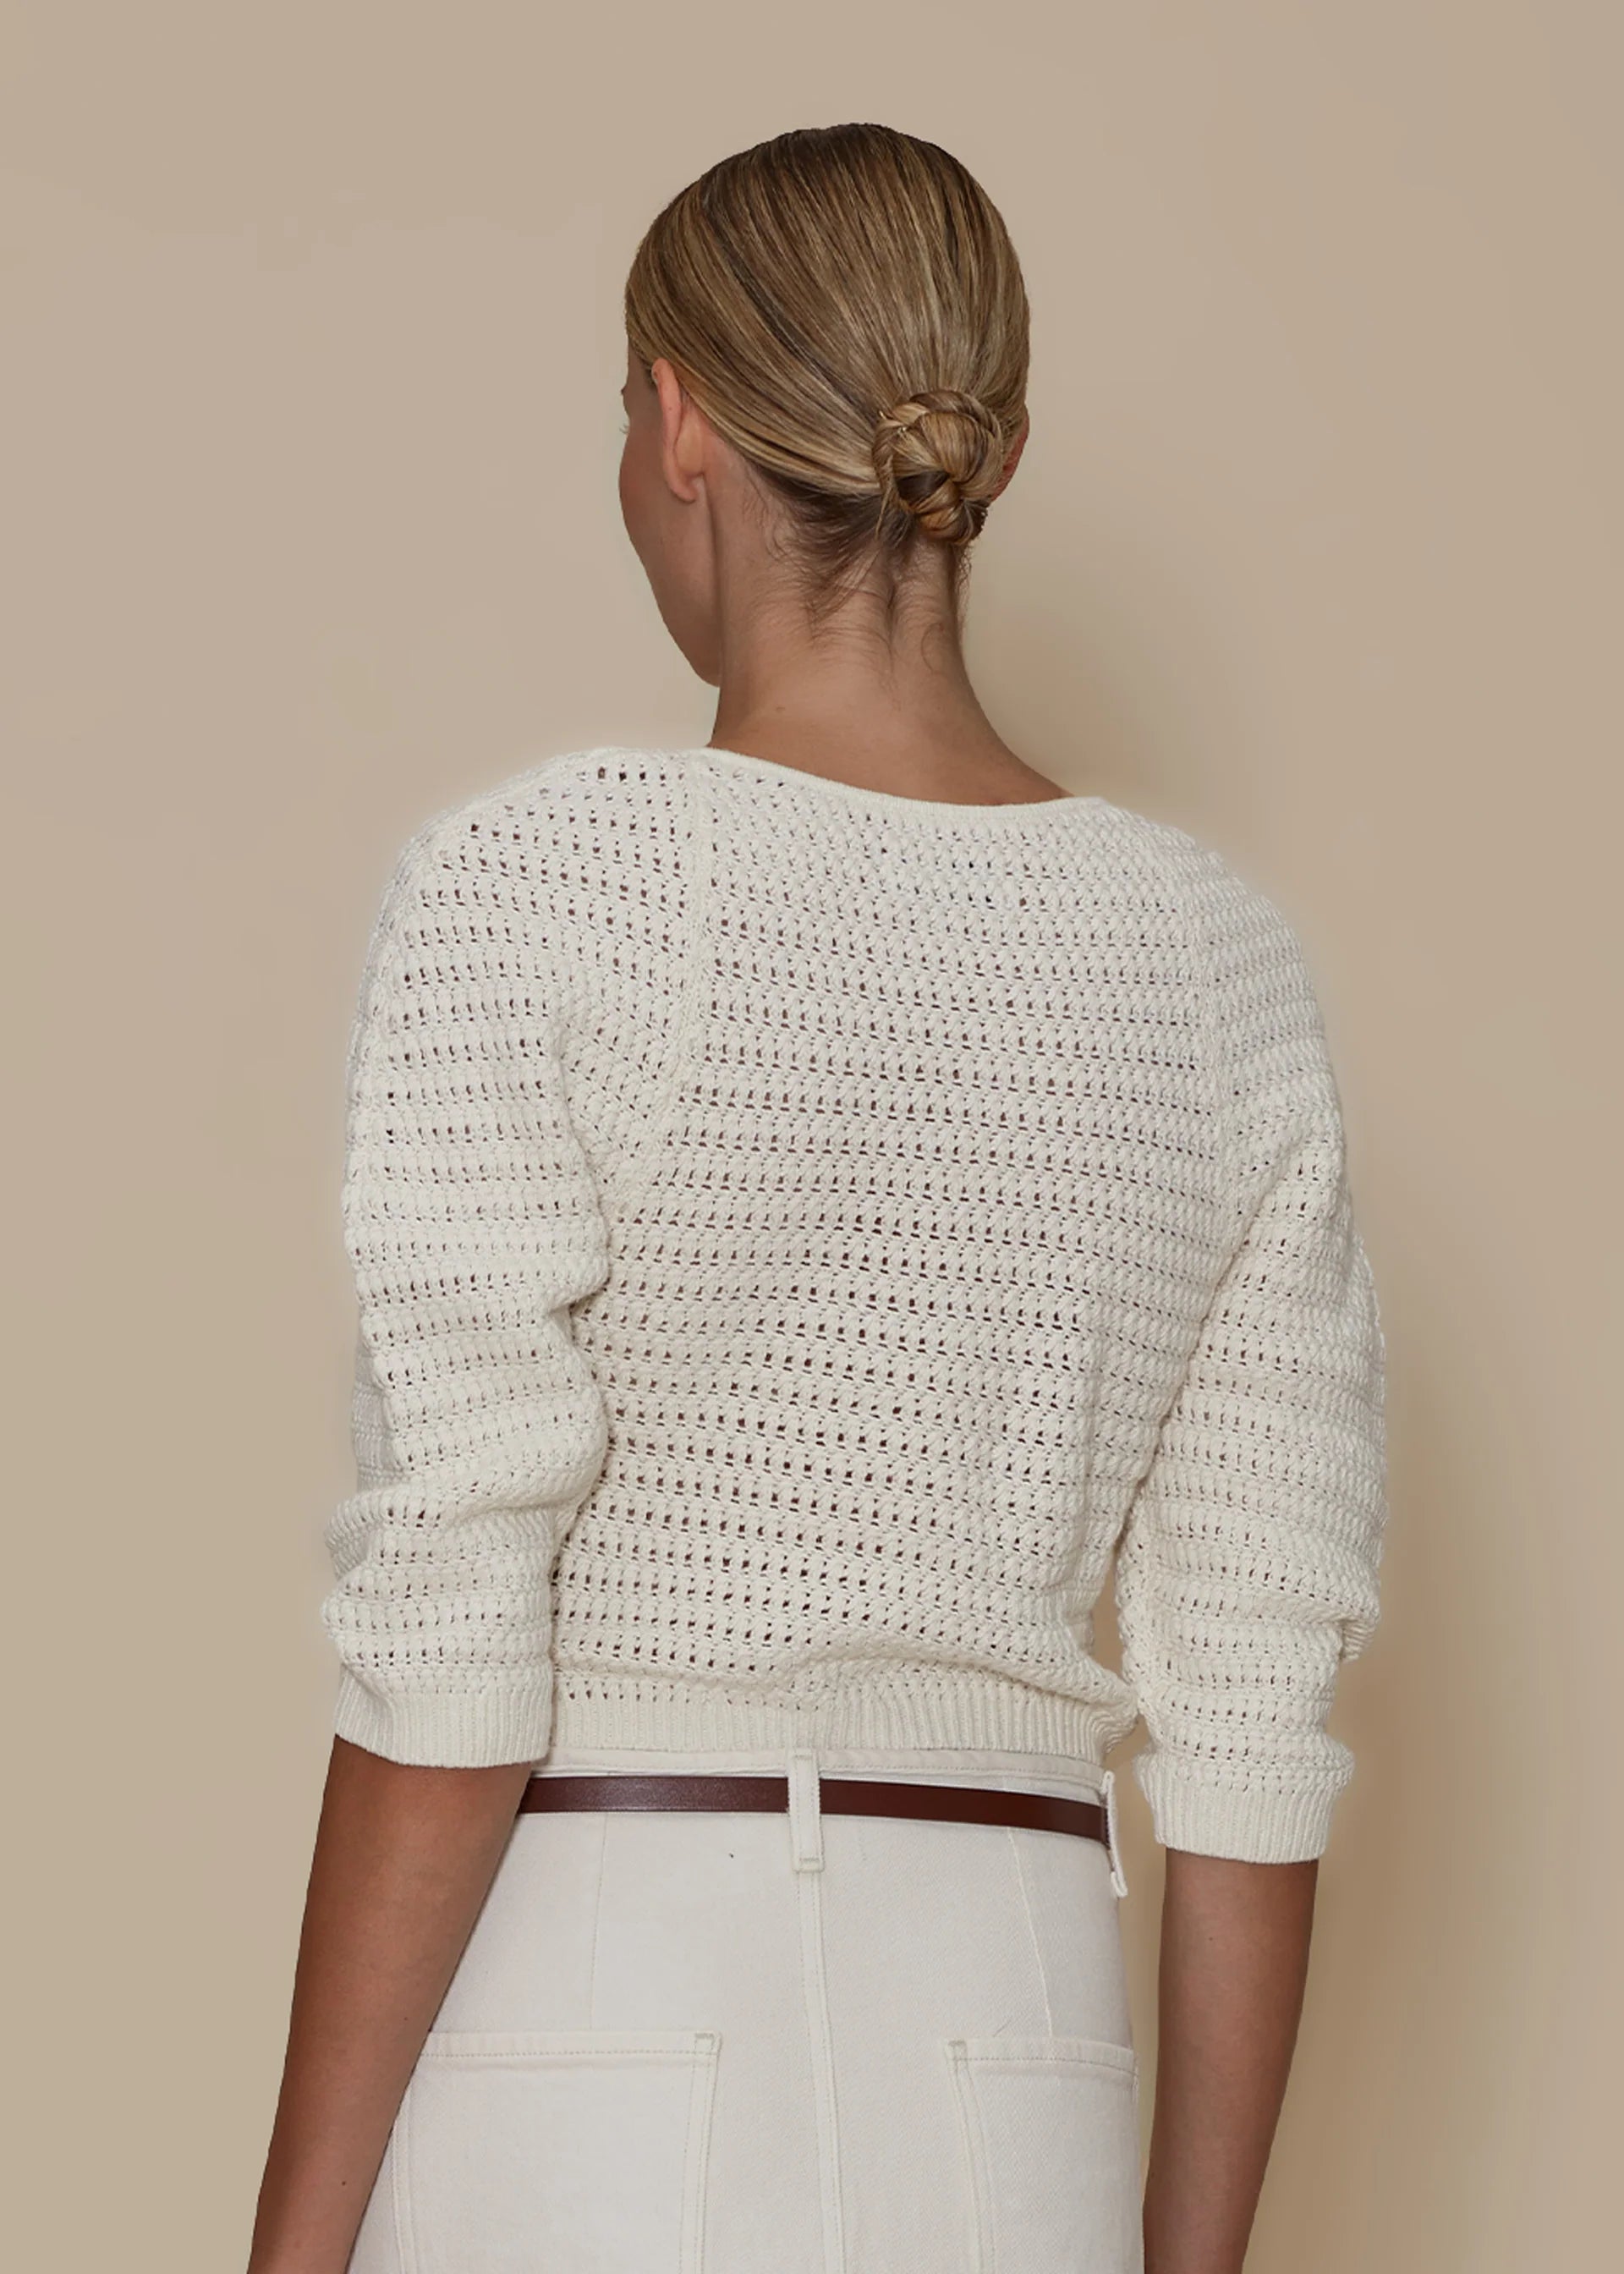 Linen Crochet Top